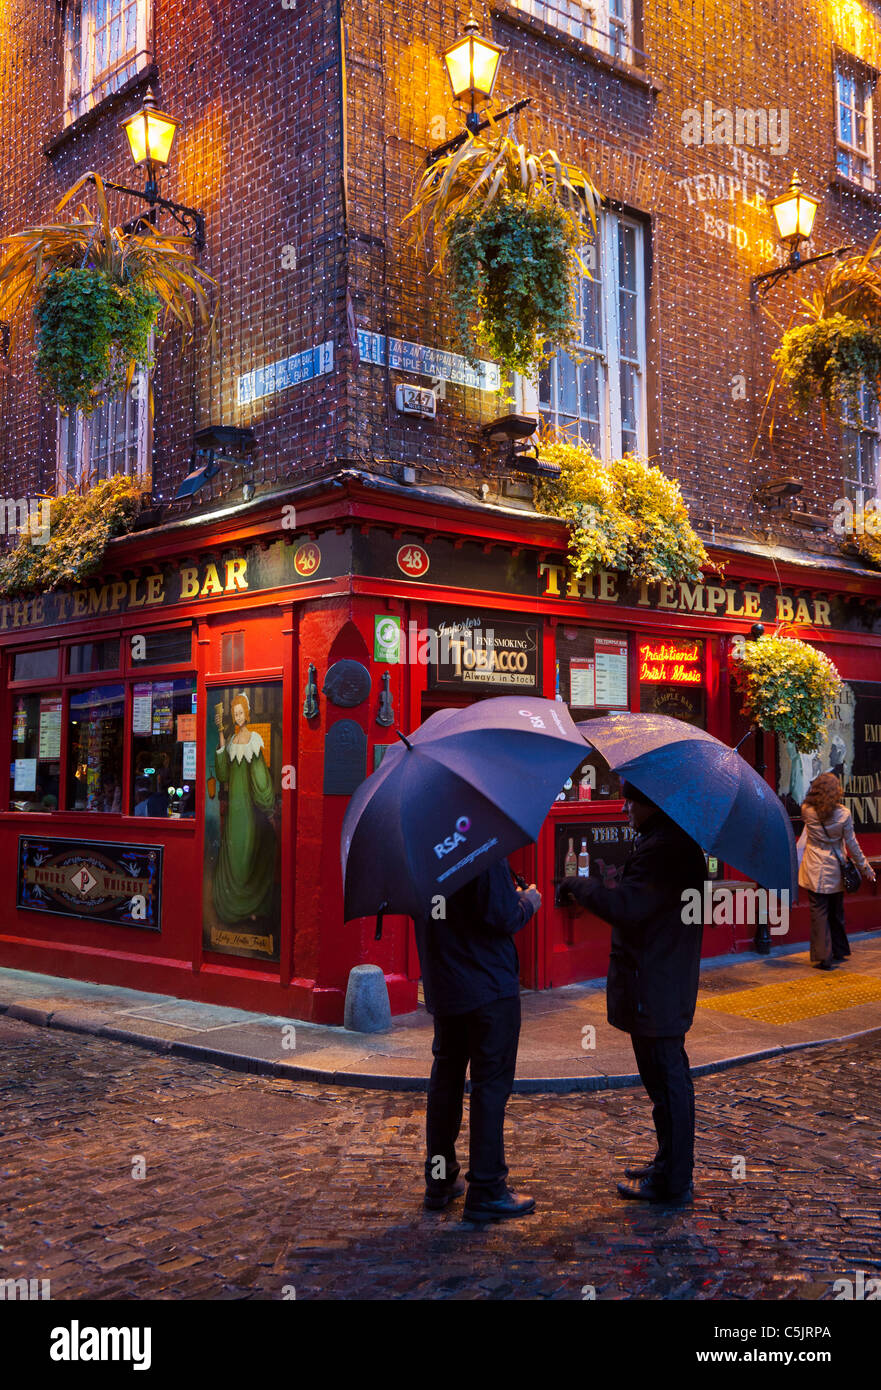 Temple Bar pub in Dublin, Ireland Stock Photo